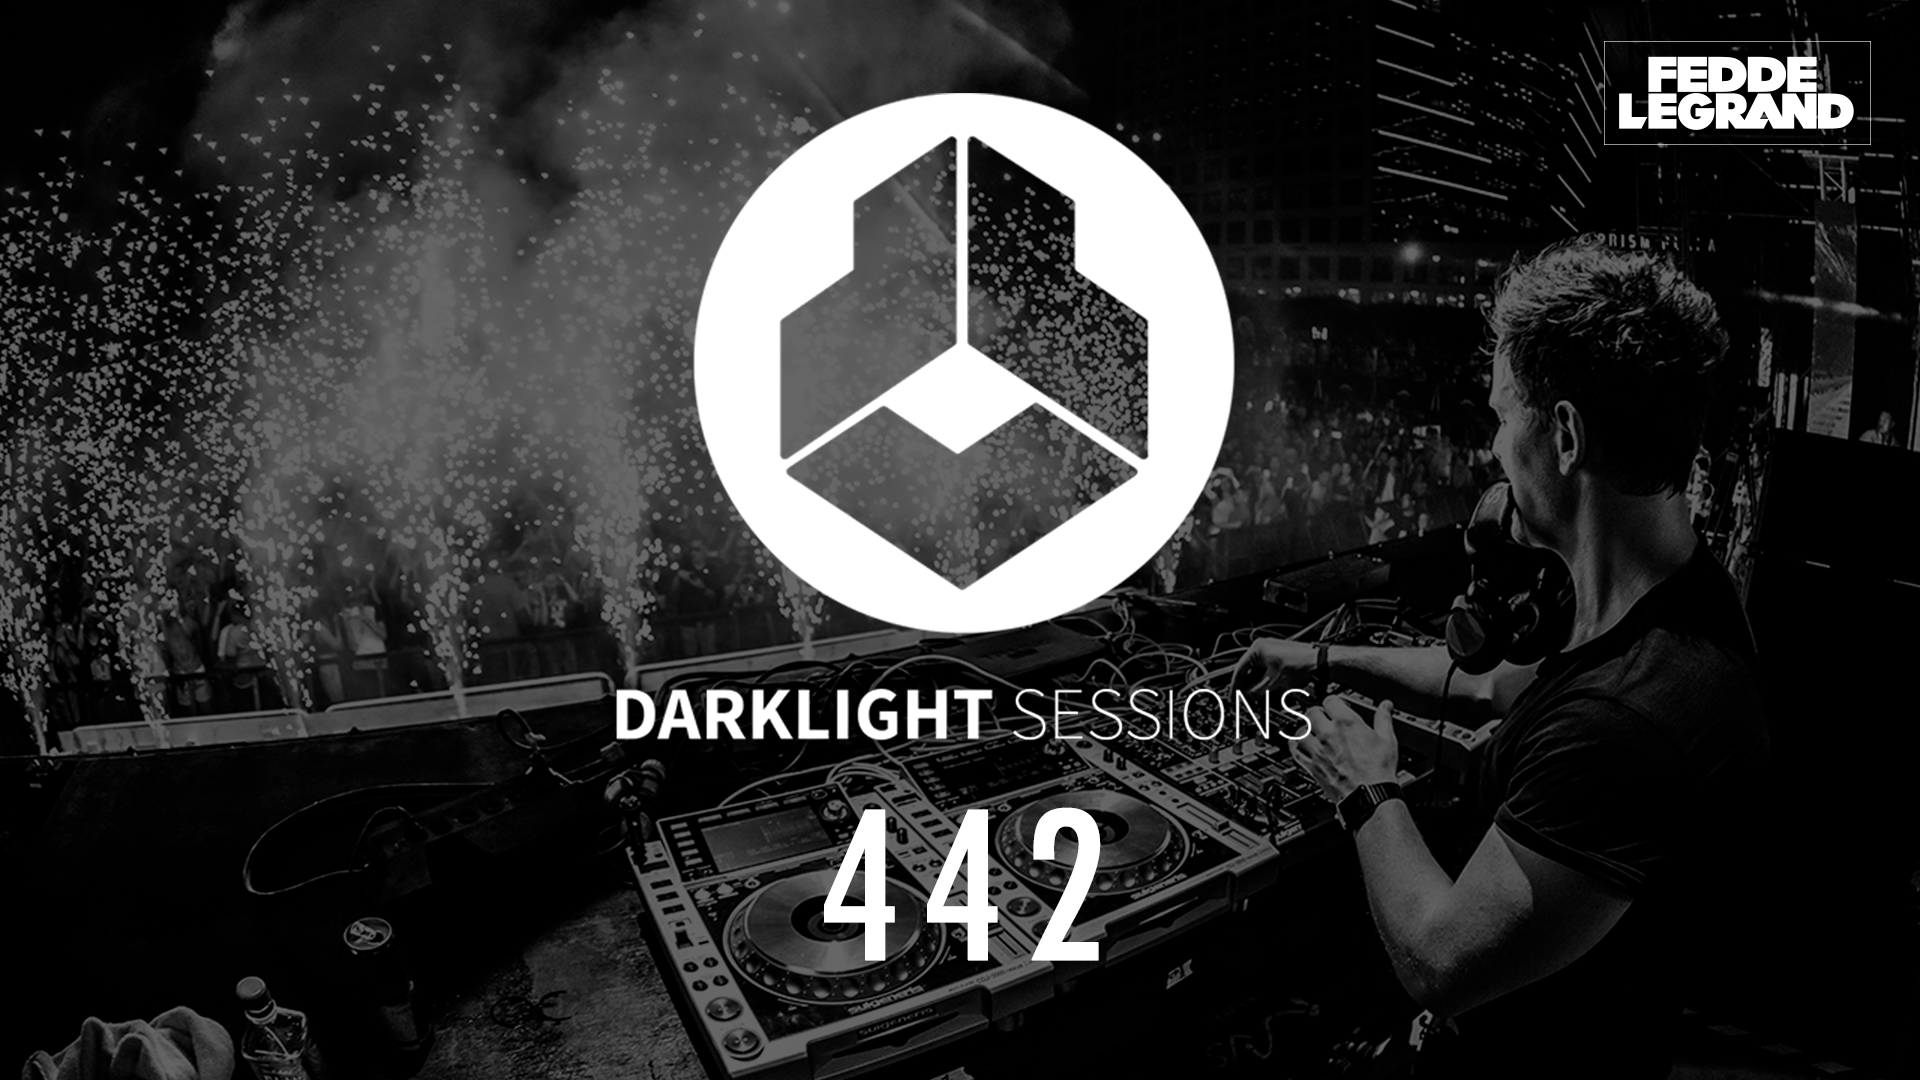 Darklight Sessions 442